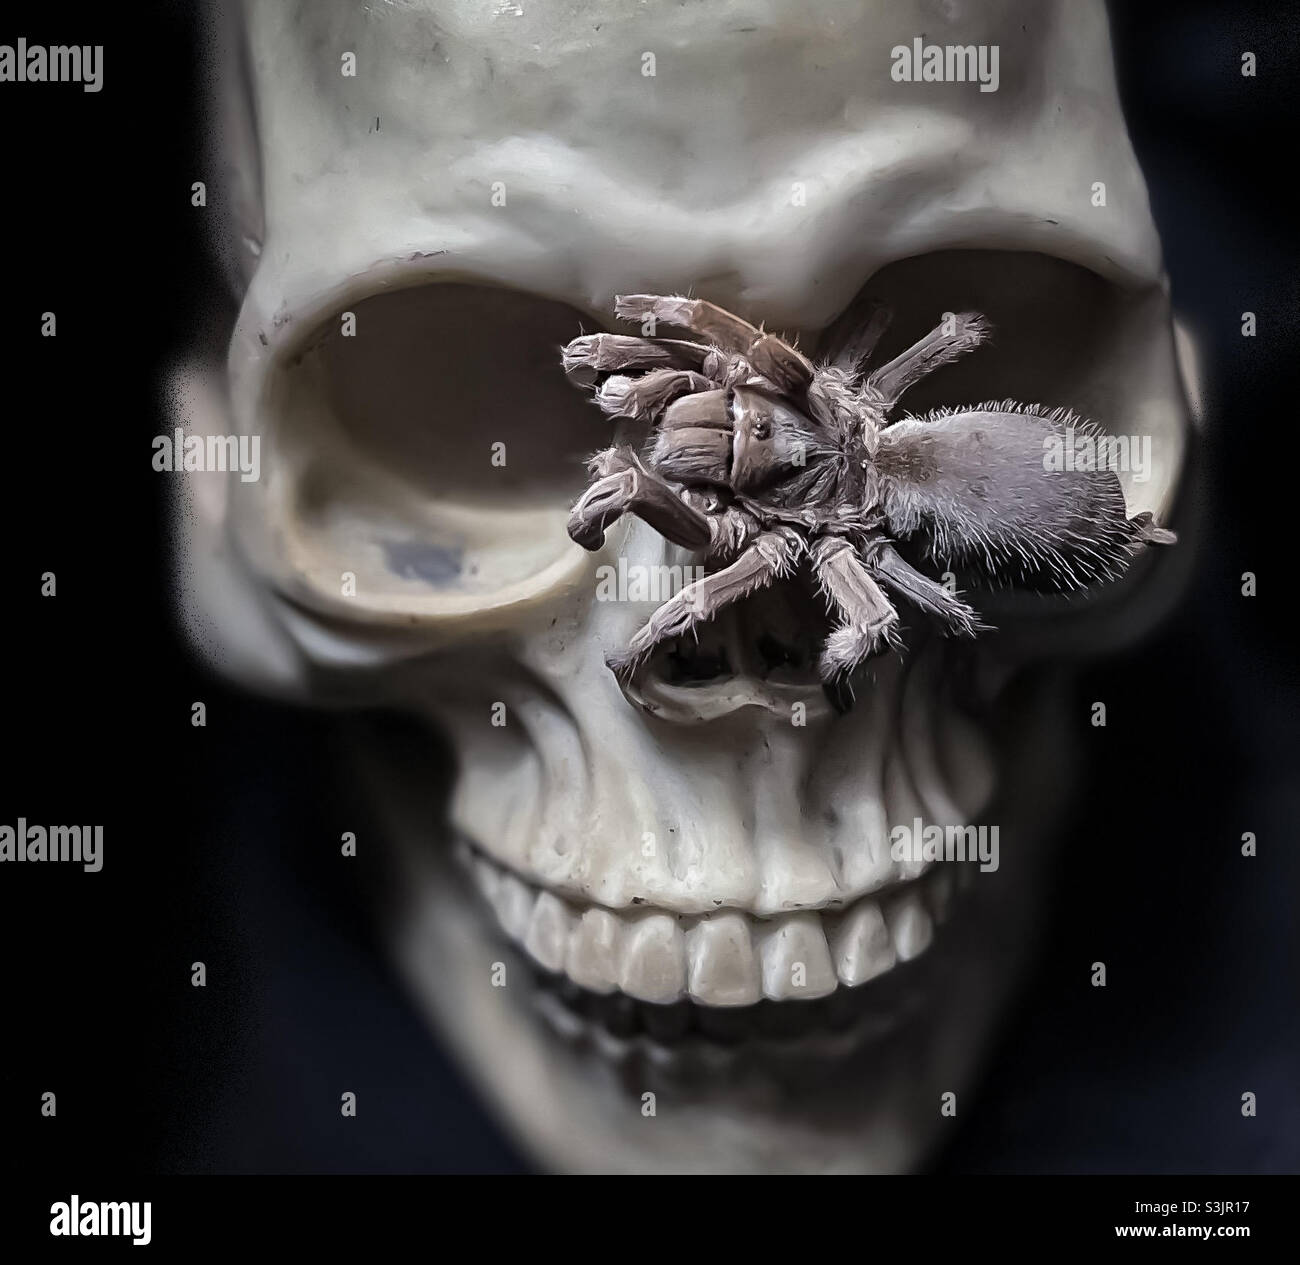 Massive hairy spider on skulls face Stock Photo